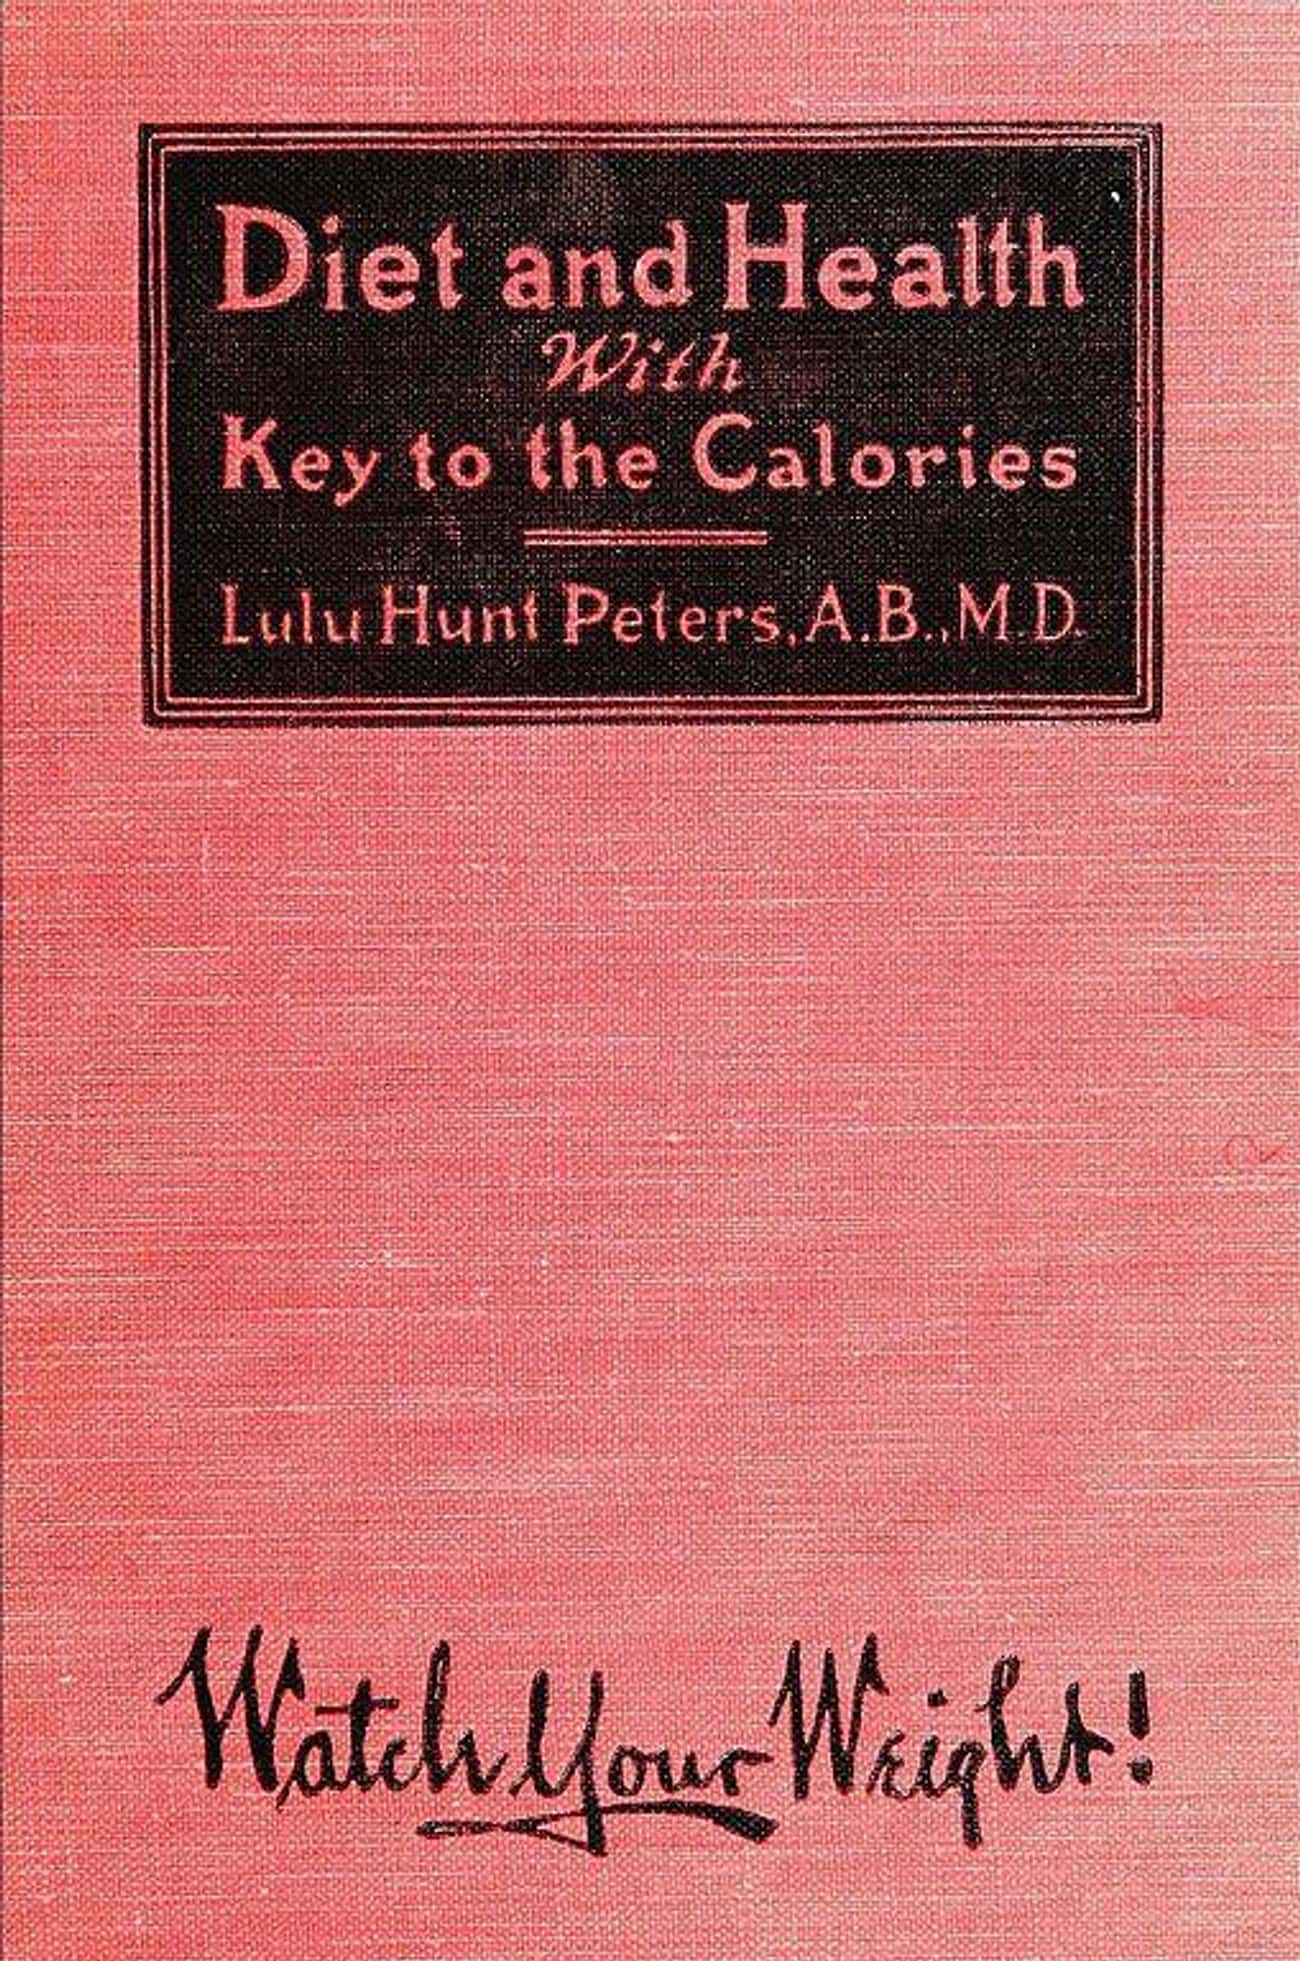 1910s: Fruit, Vegetables, Milk, And Calorie Counts